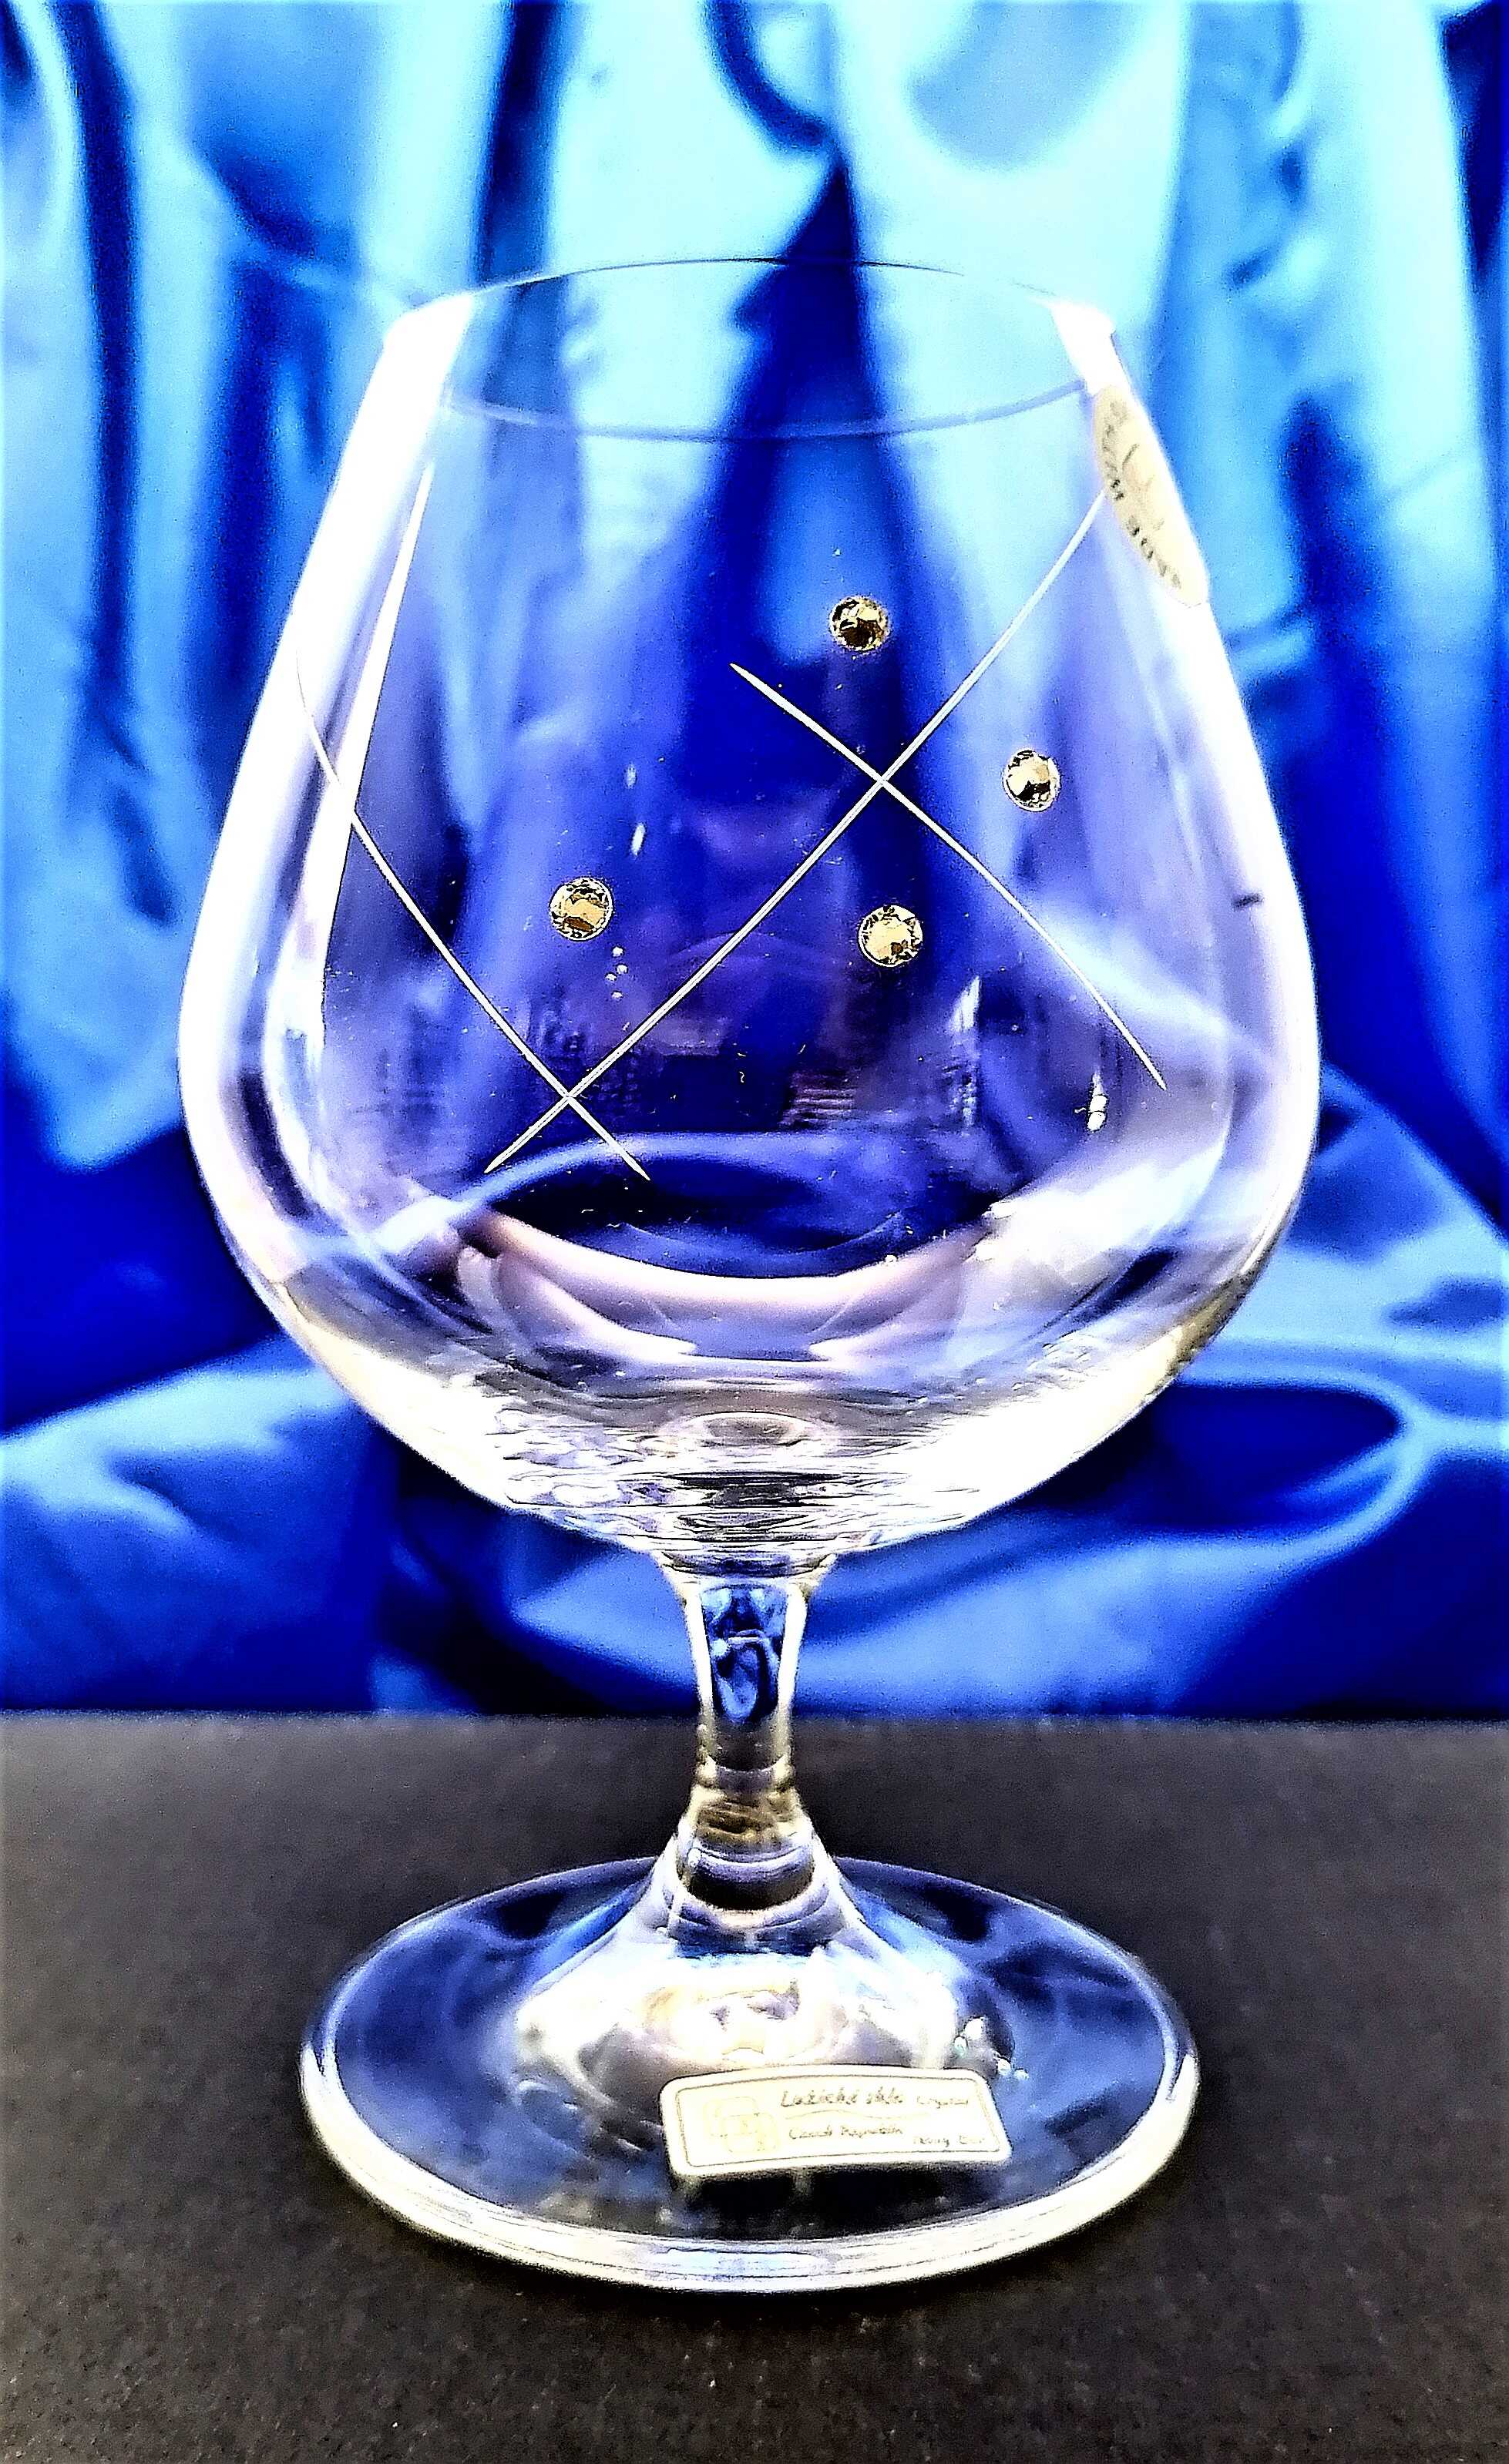 LsG-Crystal Skleničky na koňak 24 x krystaly Swarovski ručně broušené vzor Carla dárkové balení J-328 400 ml 6 Ks.